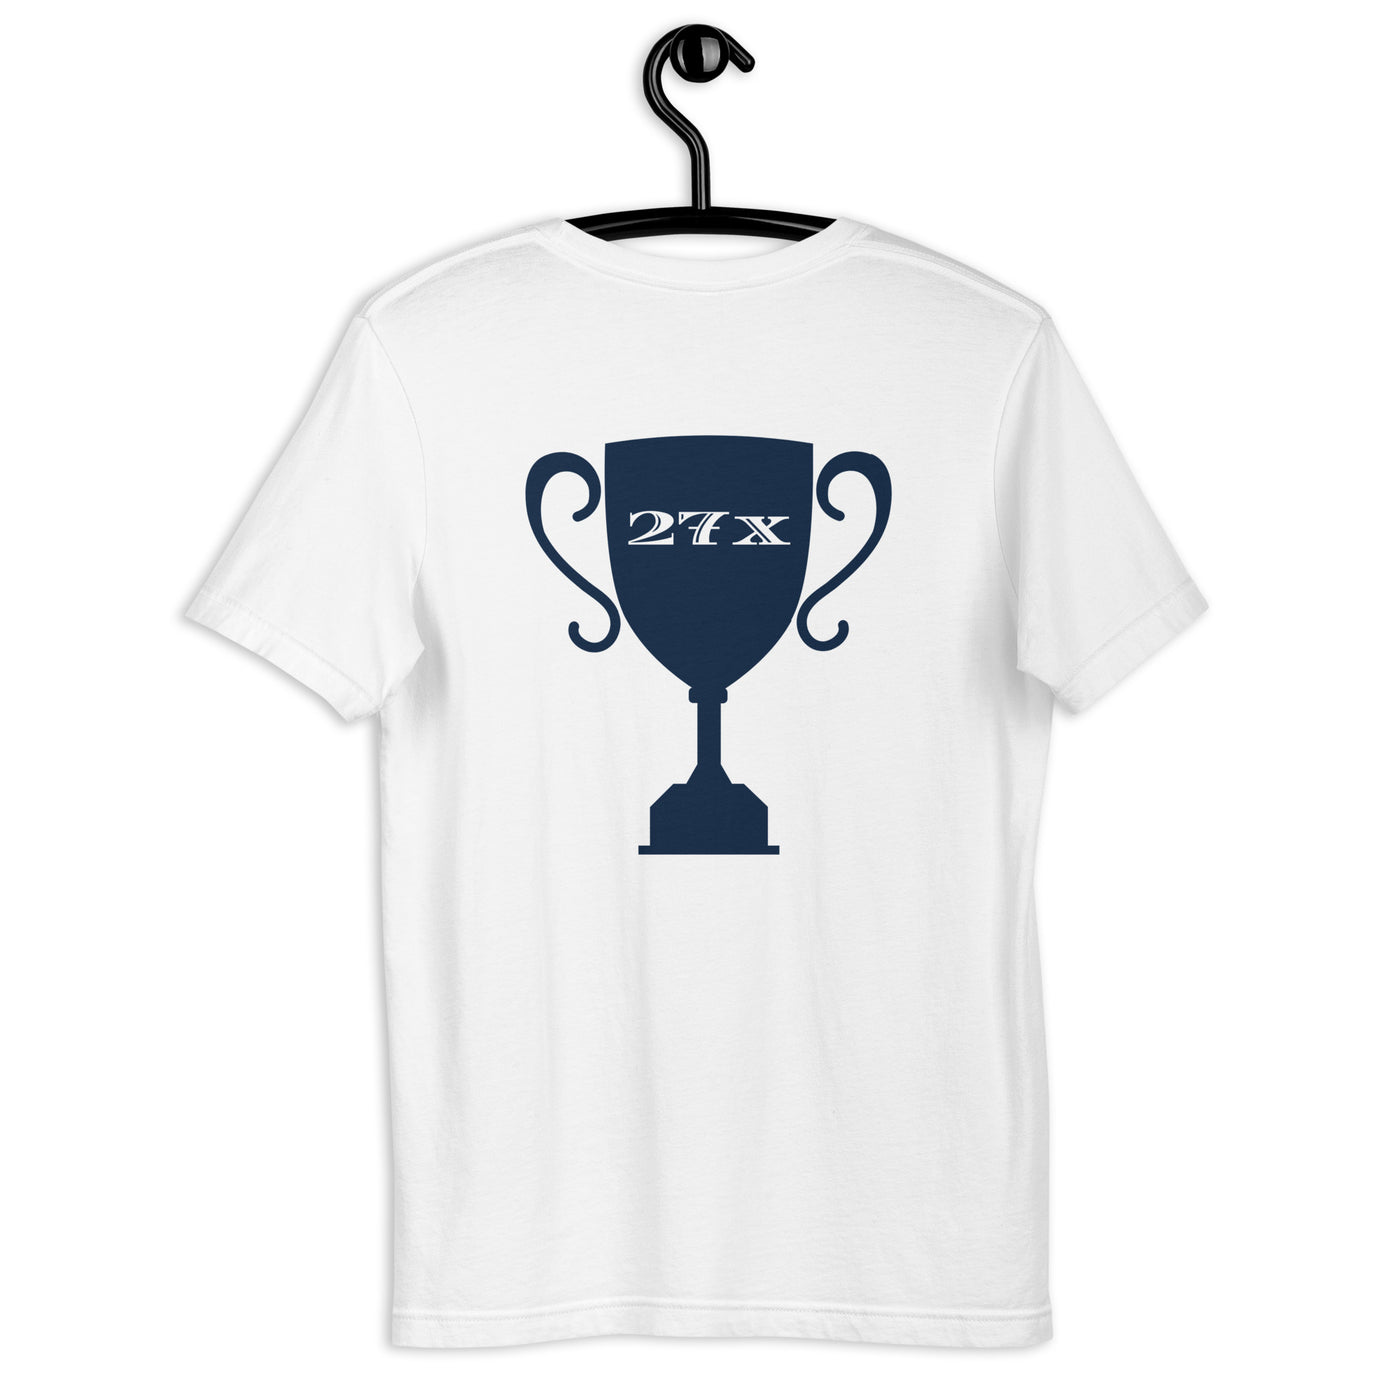 NY BASEBALL POR VIDA Unisex t-shirt